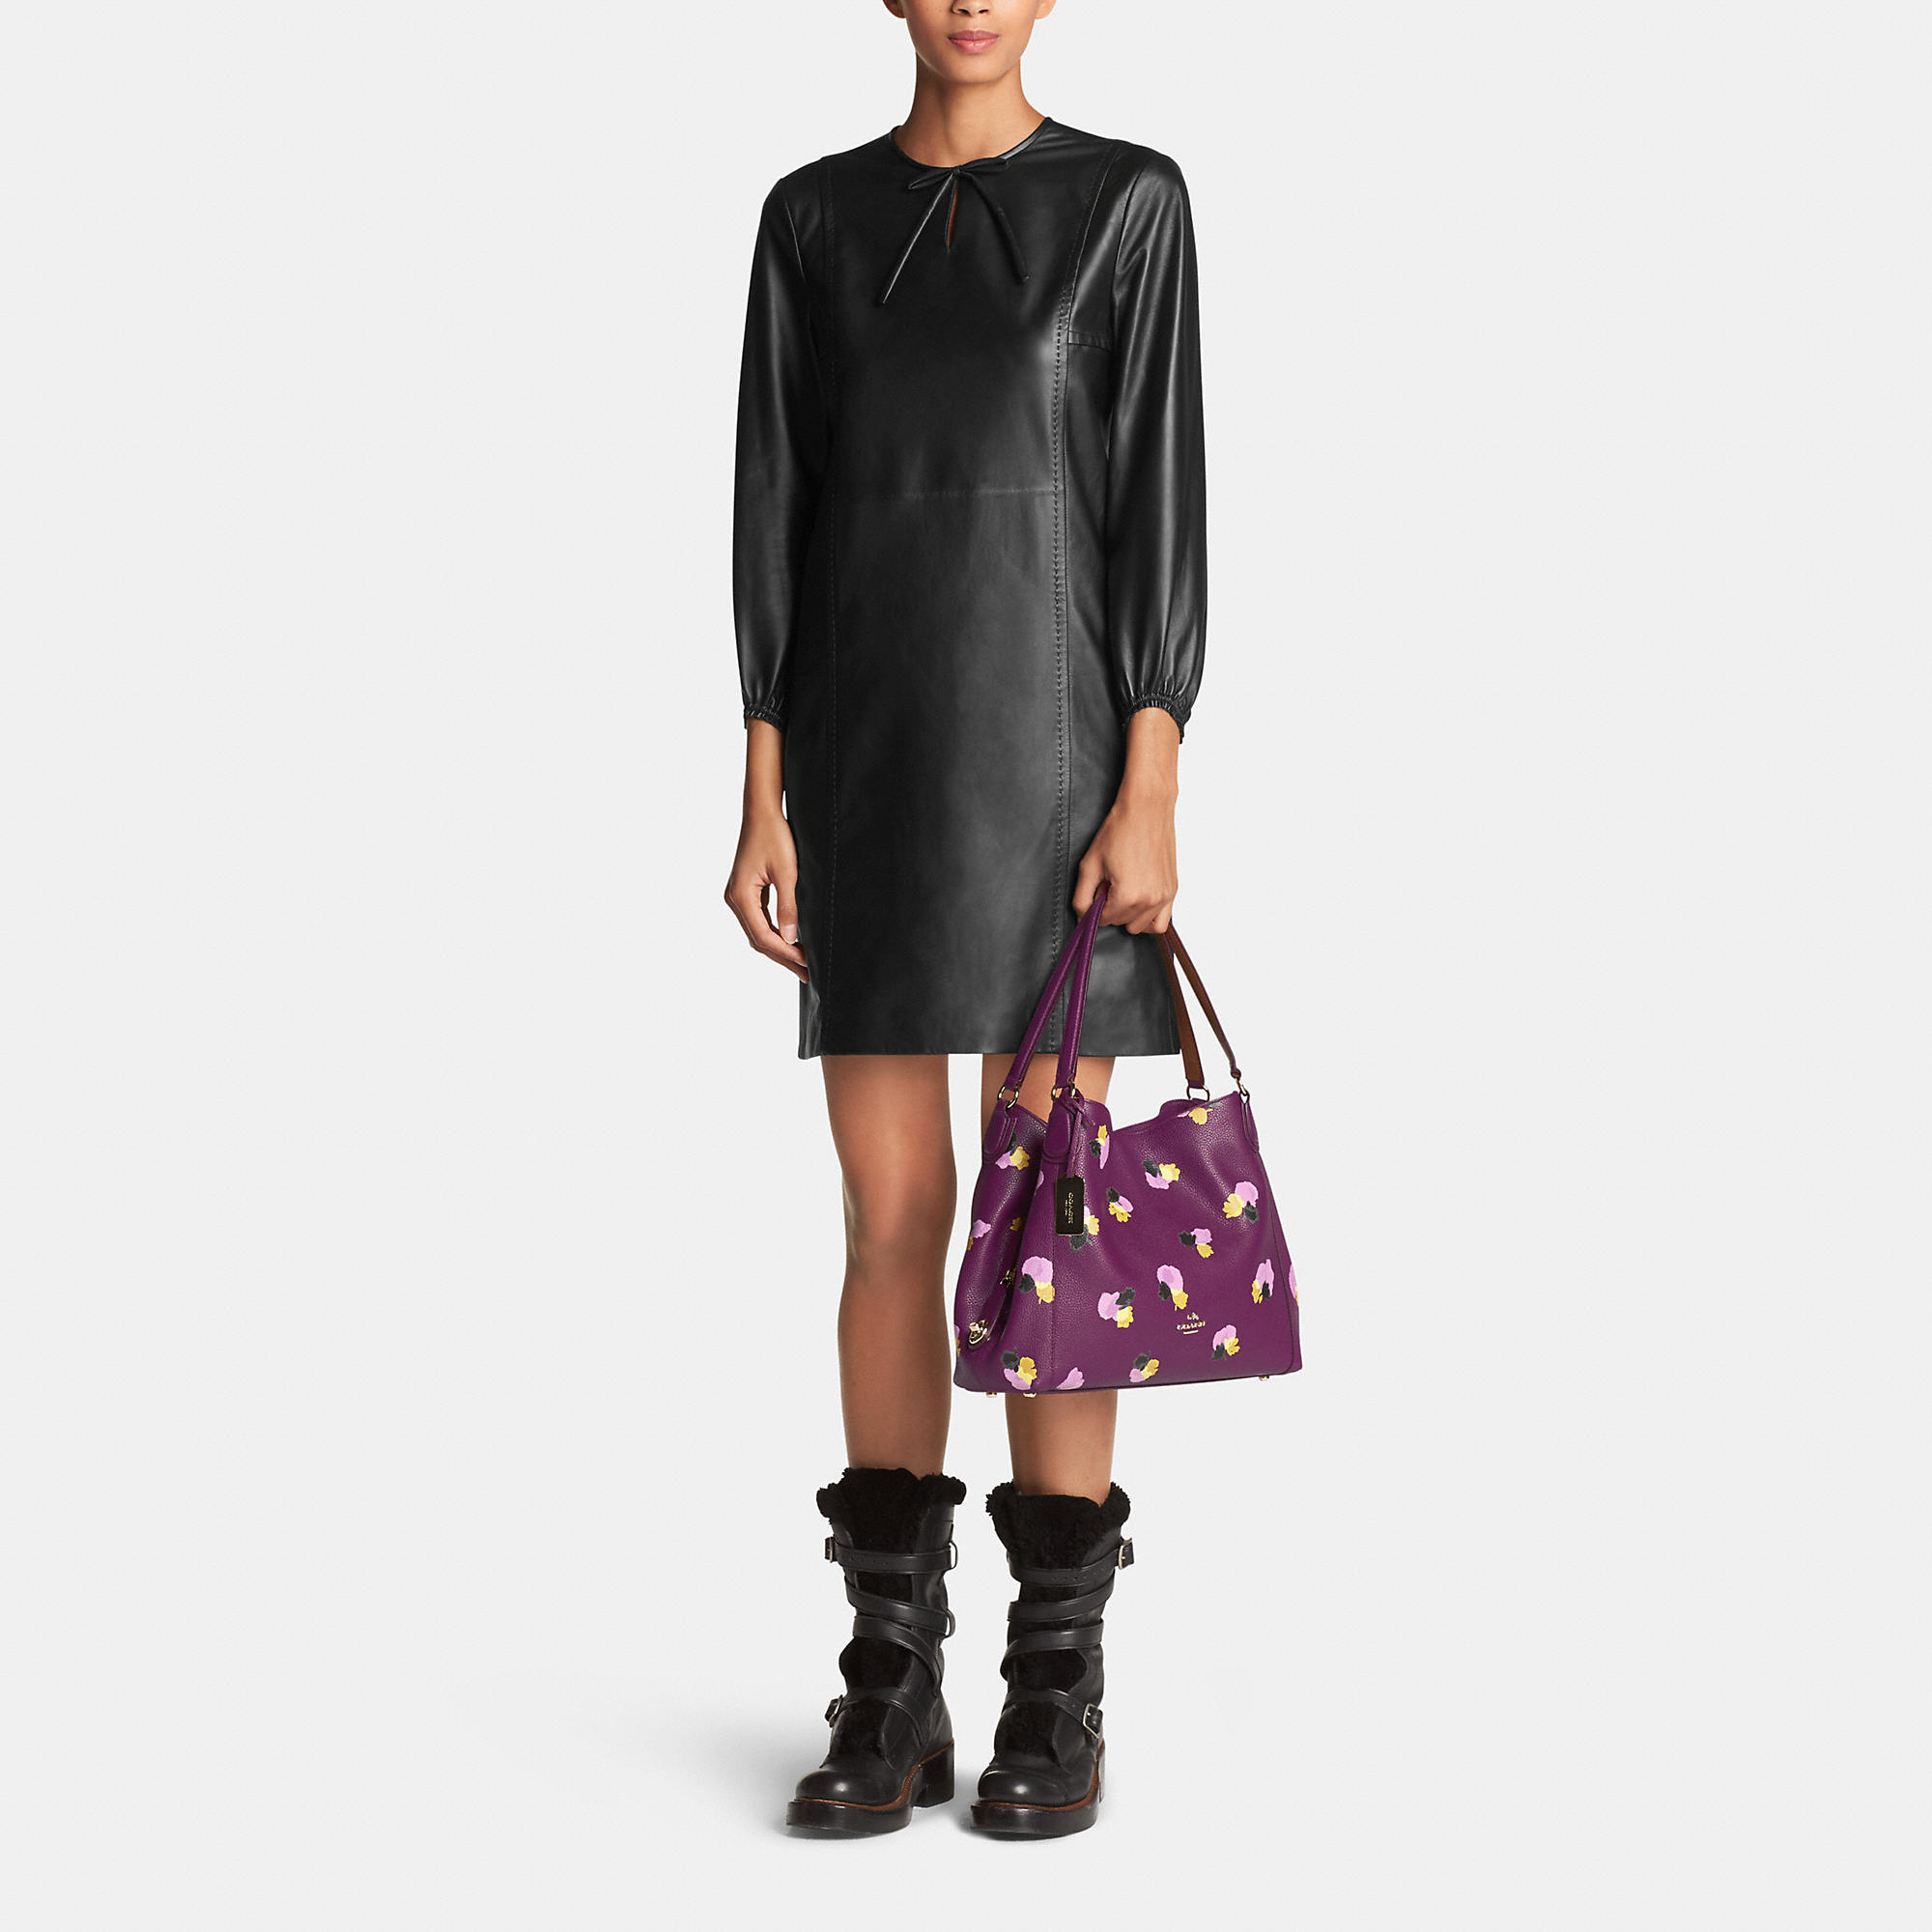 Lyst - COACH Edie Shoulder Bag 31 In Floral Print Leather in Purple